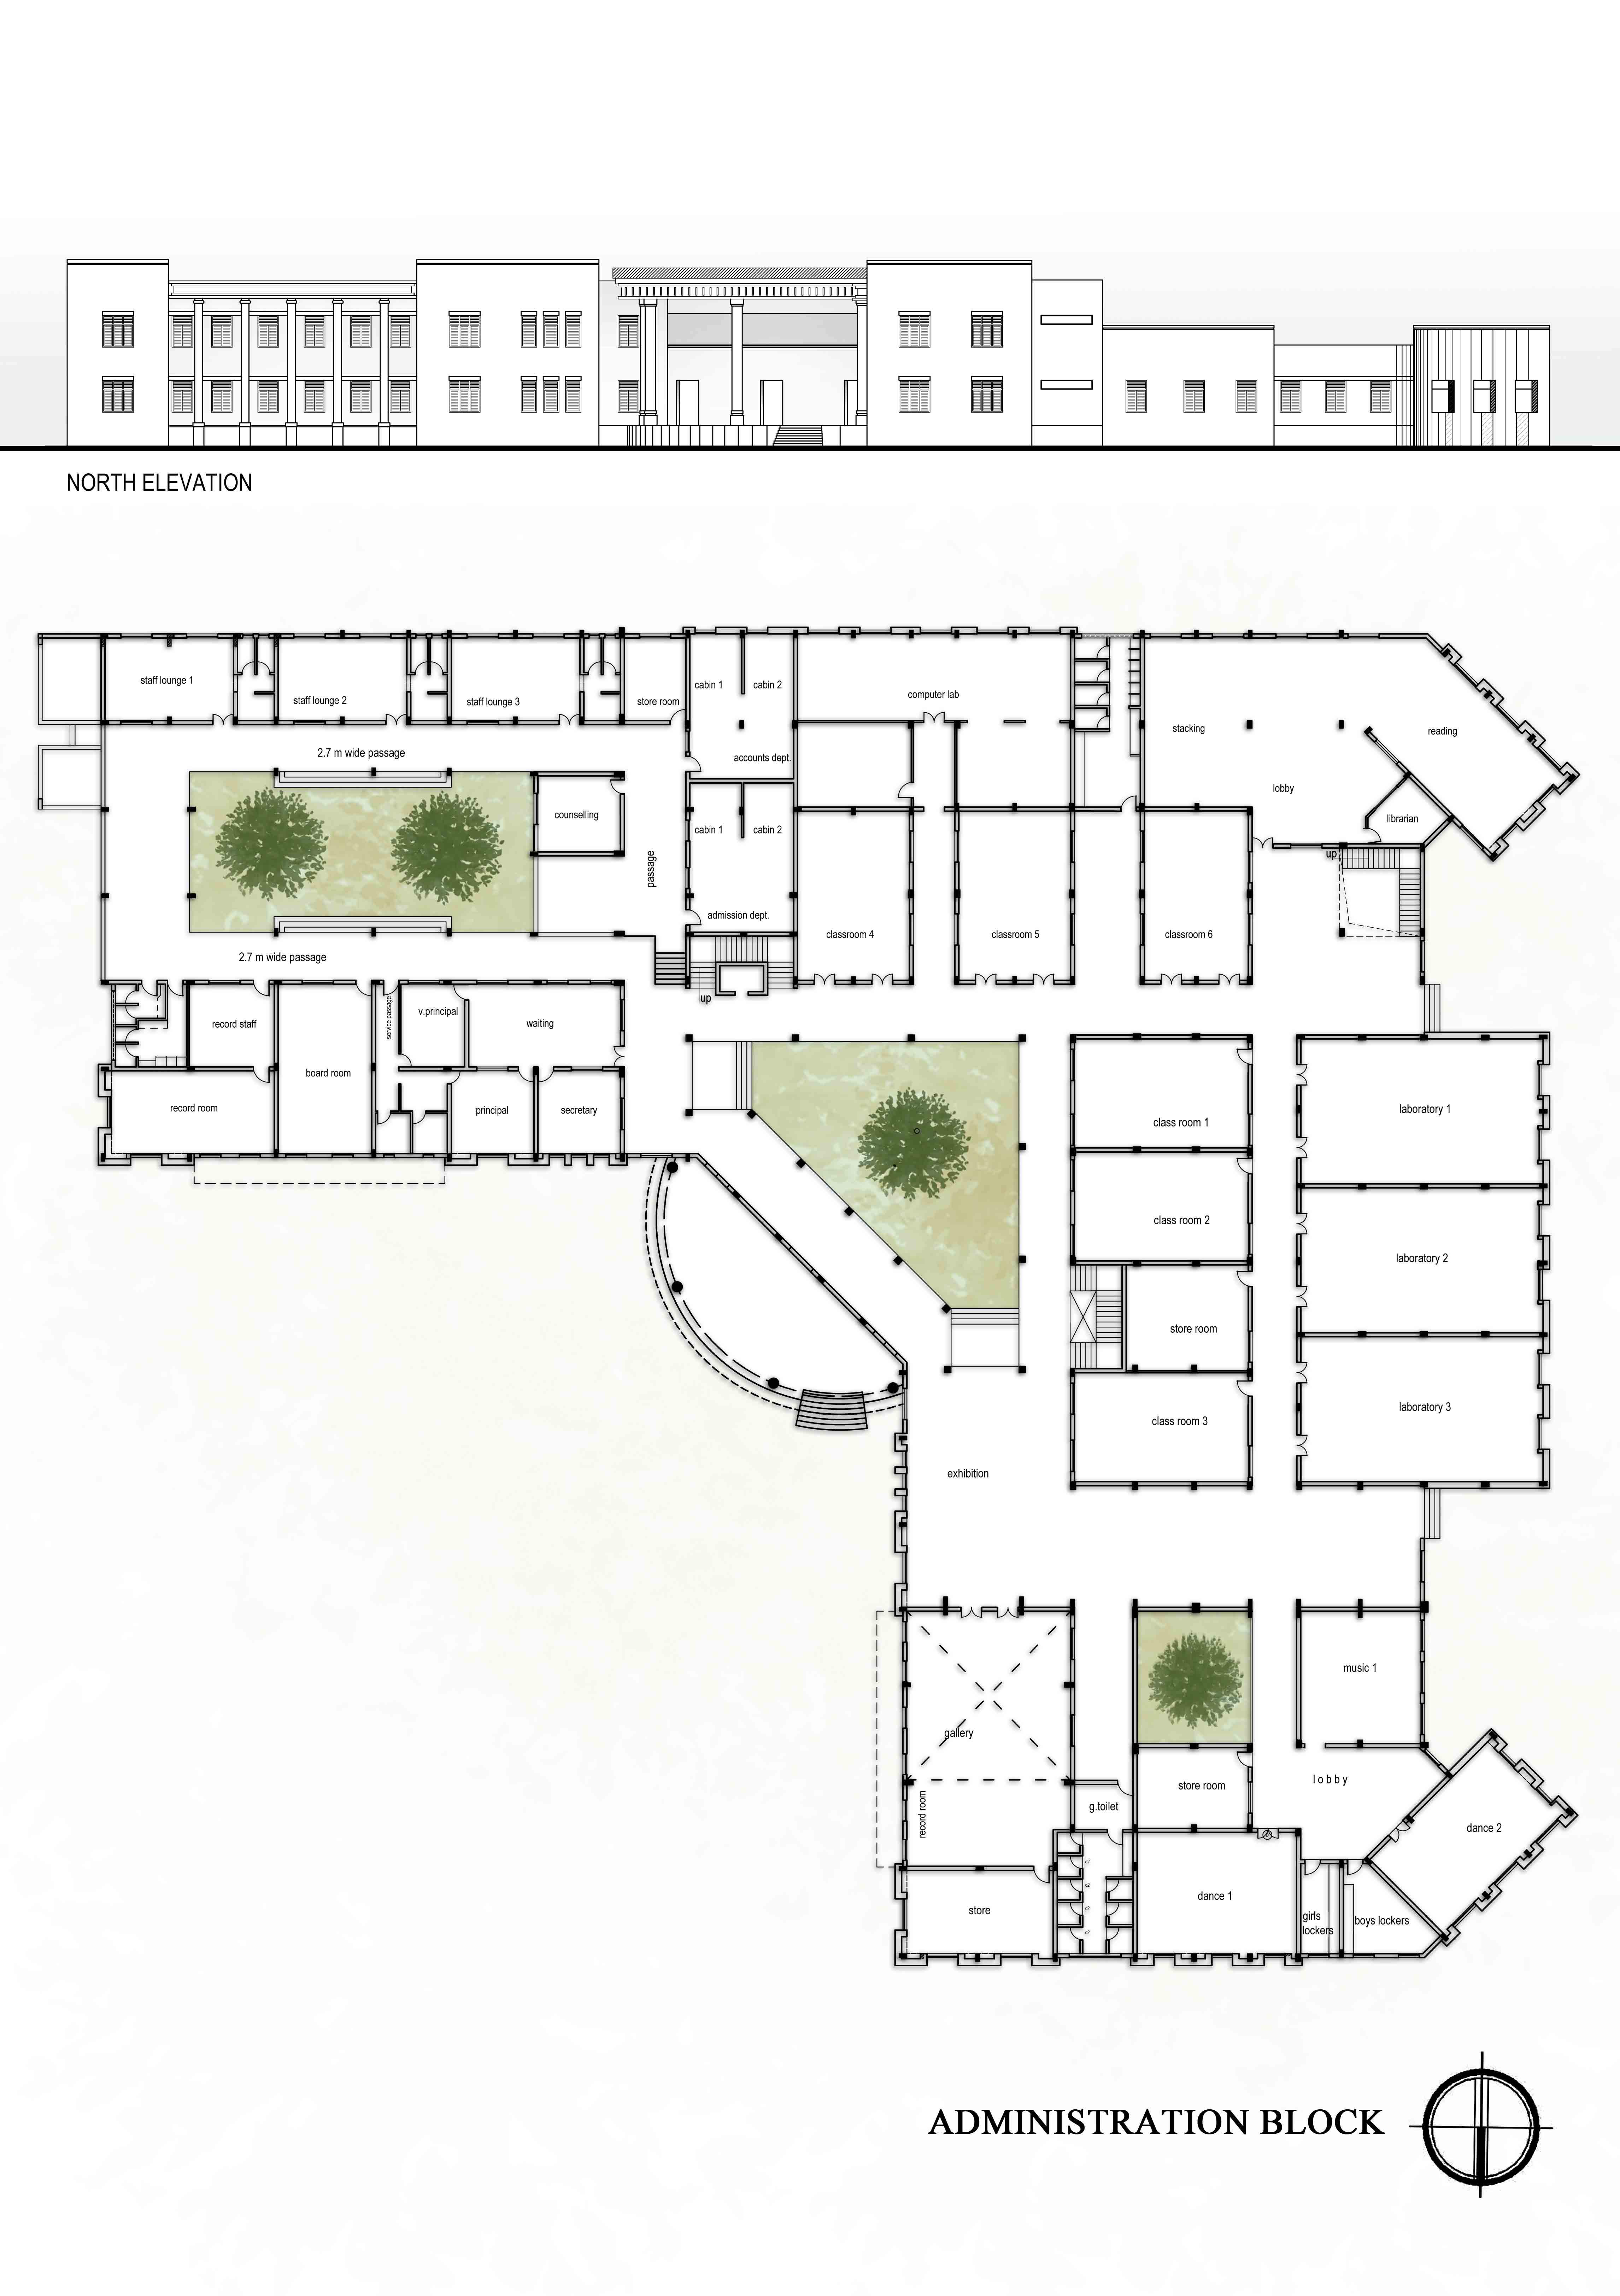 School Administration Block Floor Plan Modern House